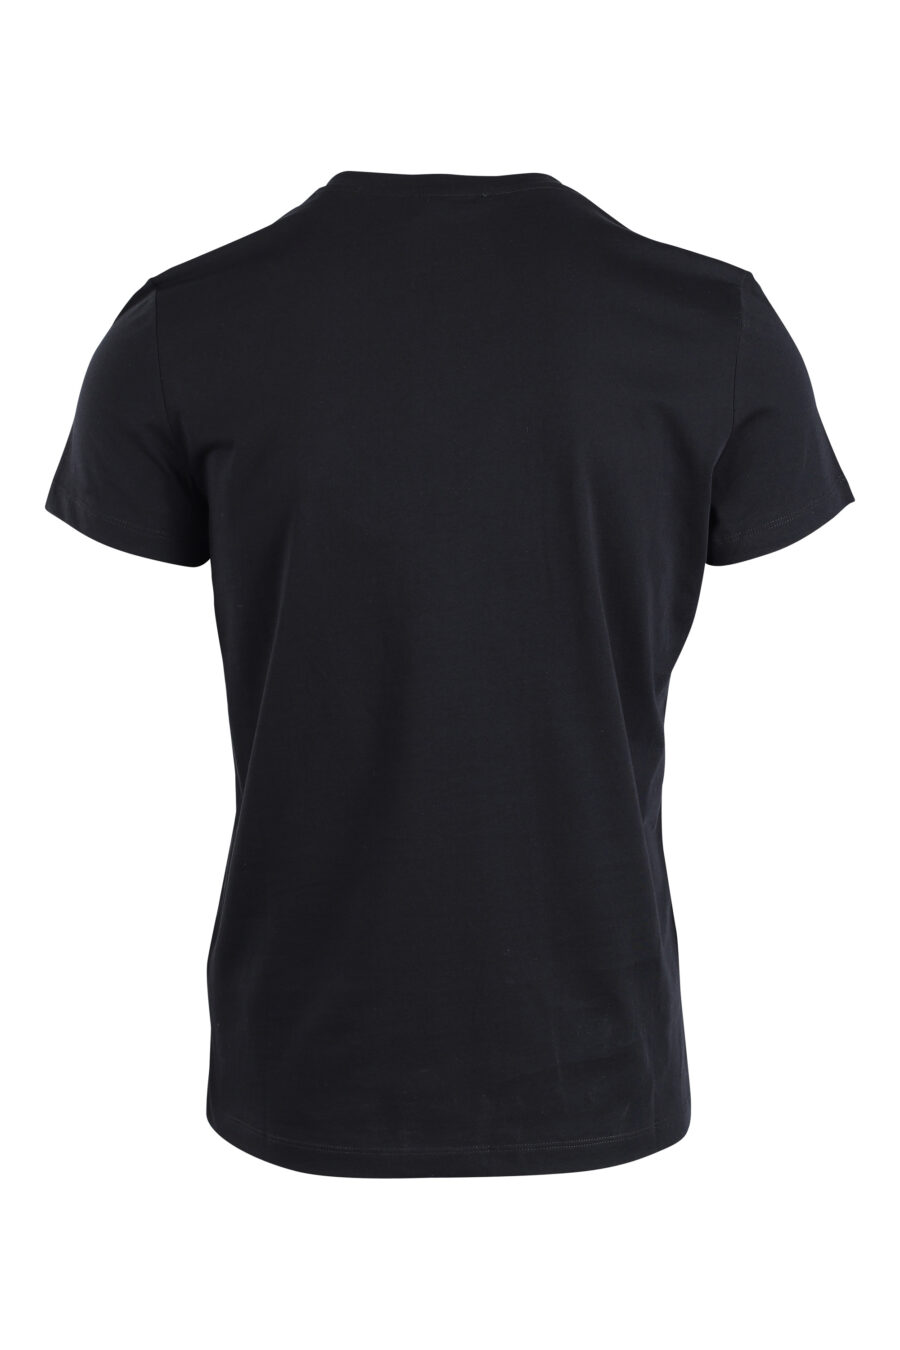 Schwarzes T-Shirt mit silbernem Maxilogo "paris" - IMG 2590